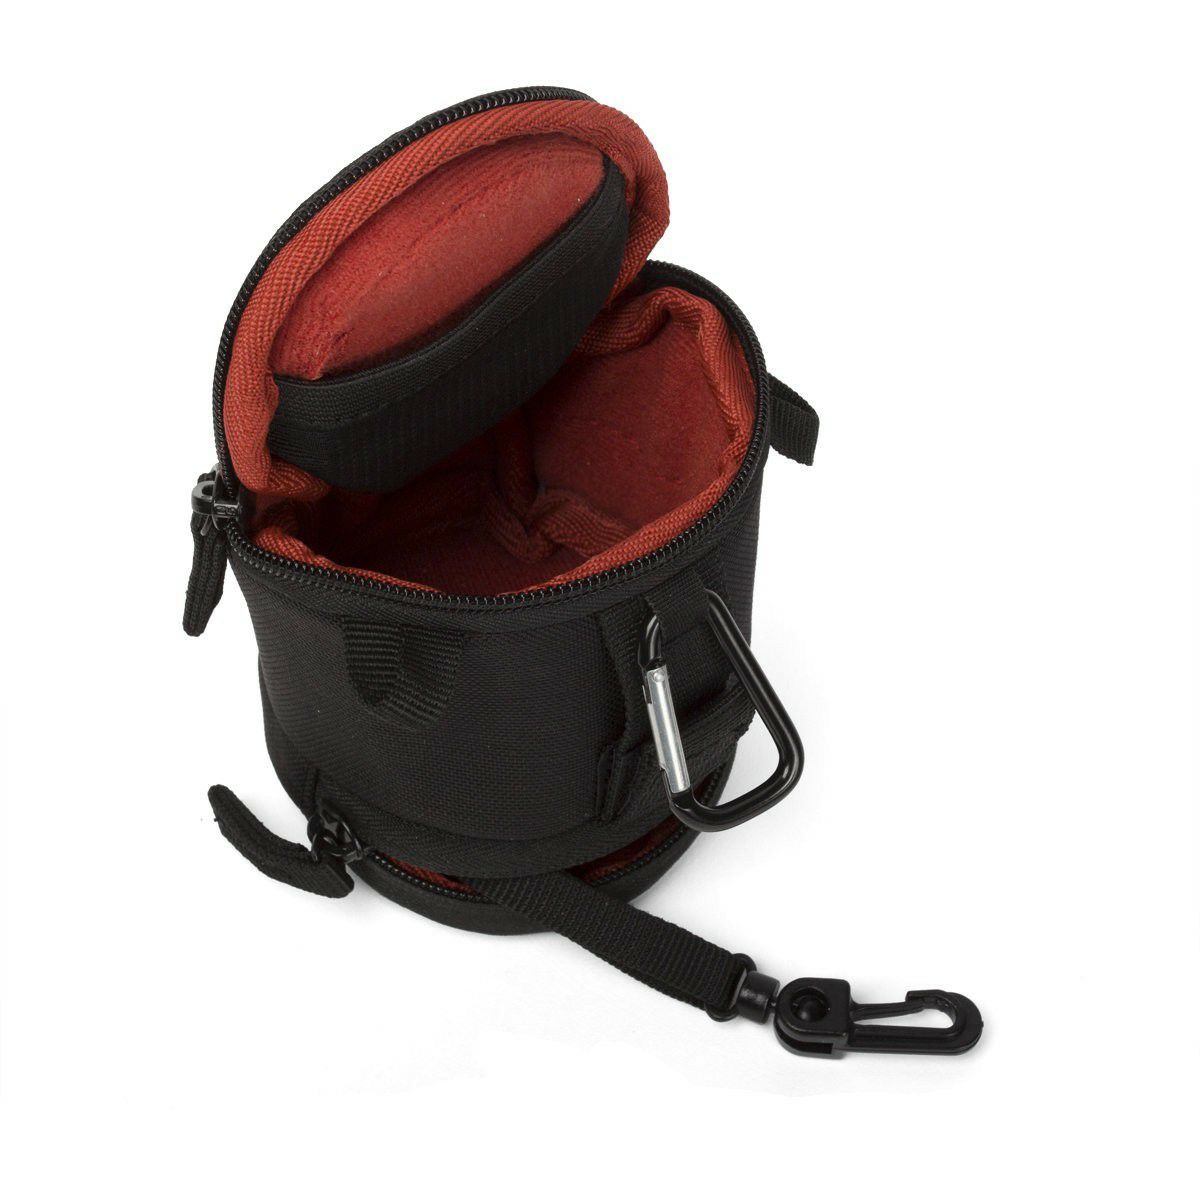 Crumpler Base Layer Lens Case S black rusted red (BLLC-S-001) crna hrđavo crvena torba za fotoaparat